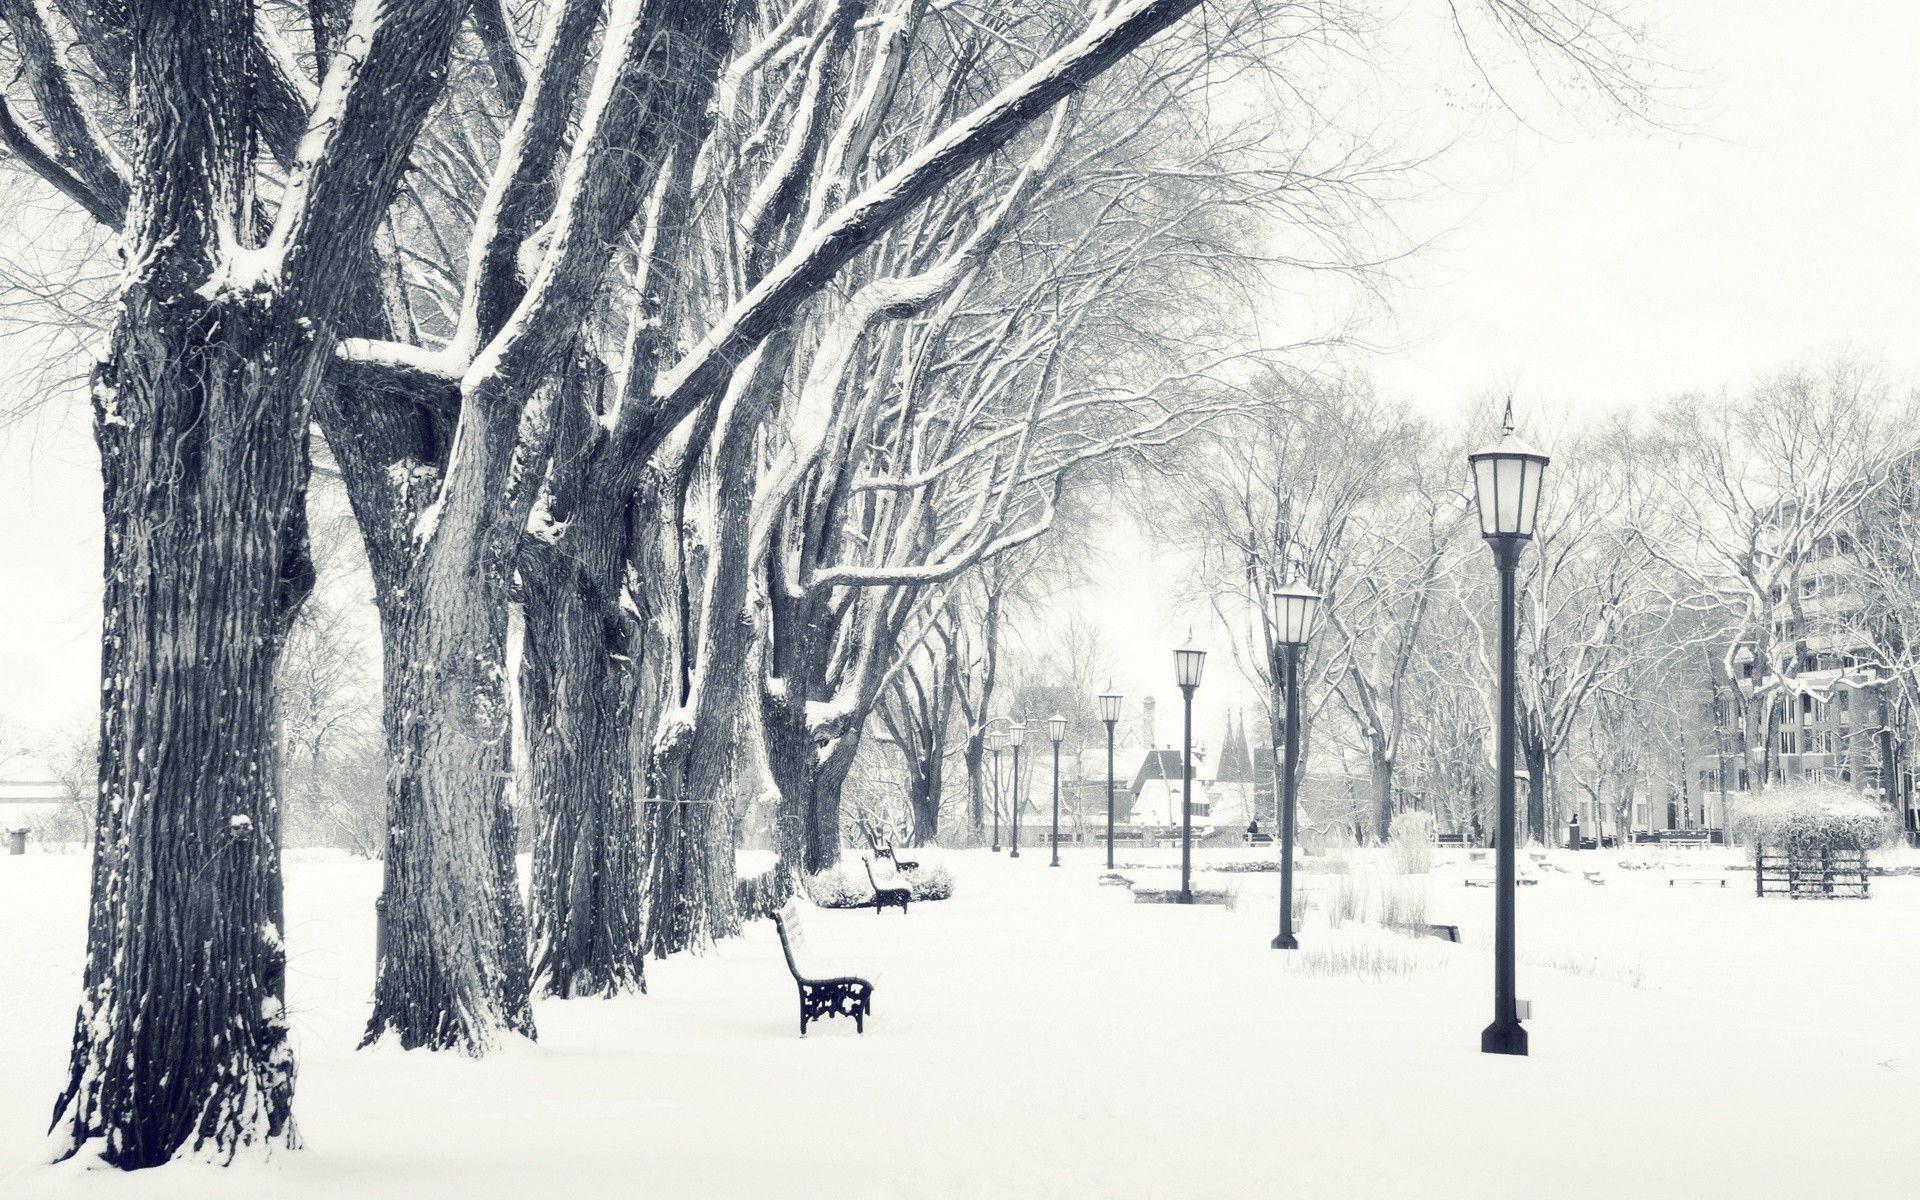 photography, Landscape, Nature, Winter, Trees, Snow, Urban, City